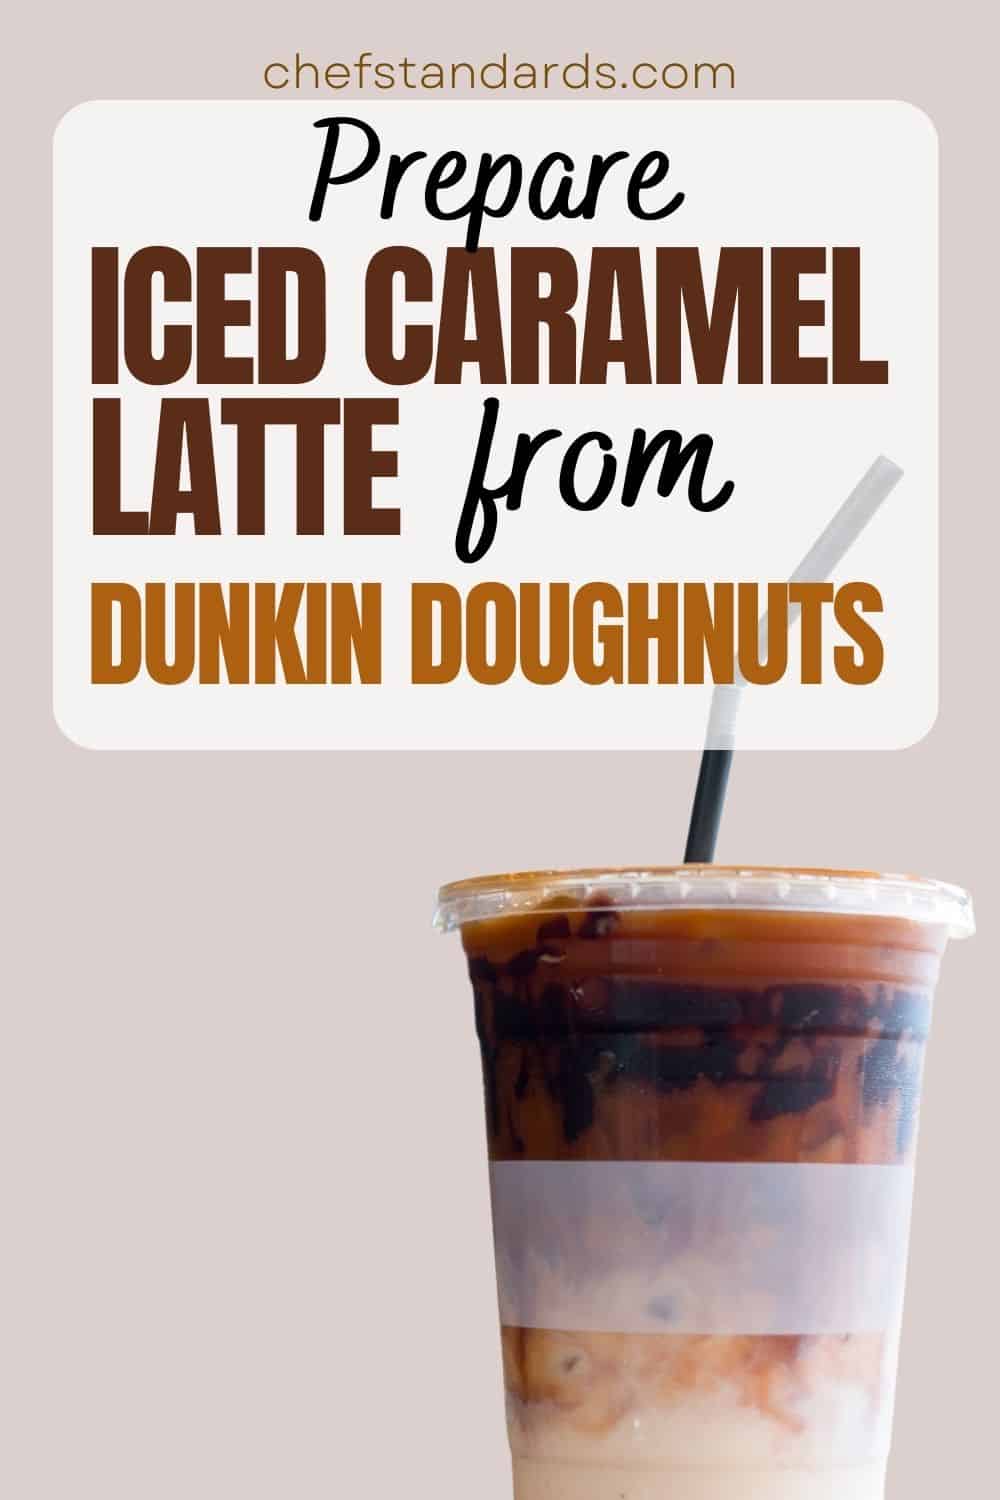 Iced Caramel Latte Dunkin Recipe + Nutritional Value
